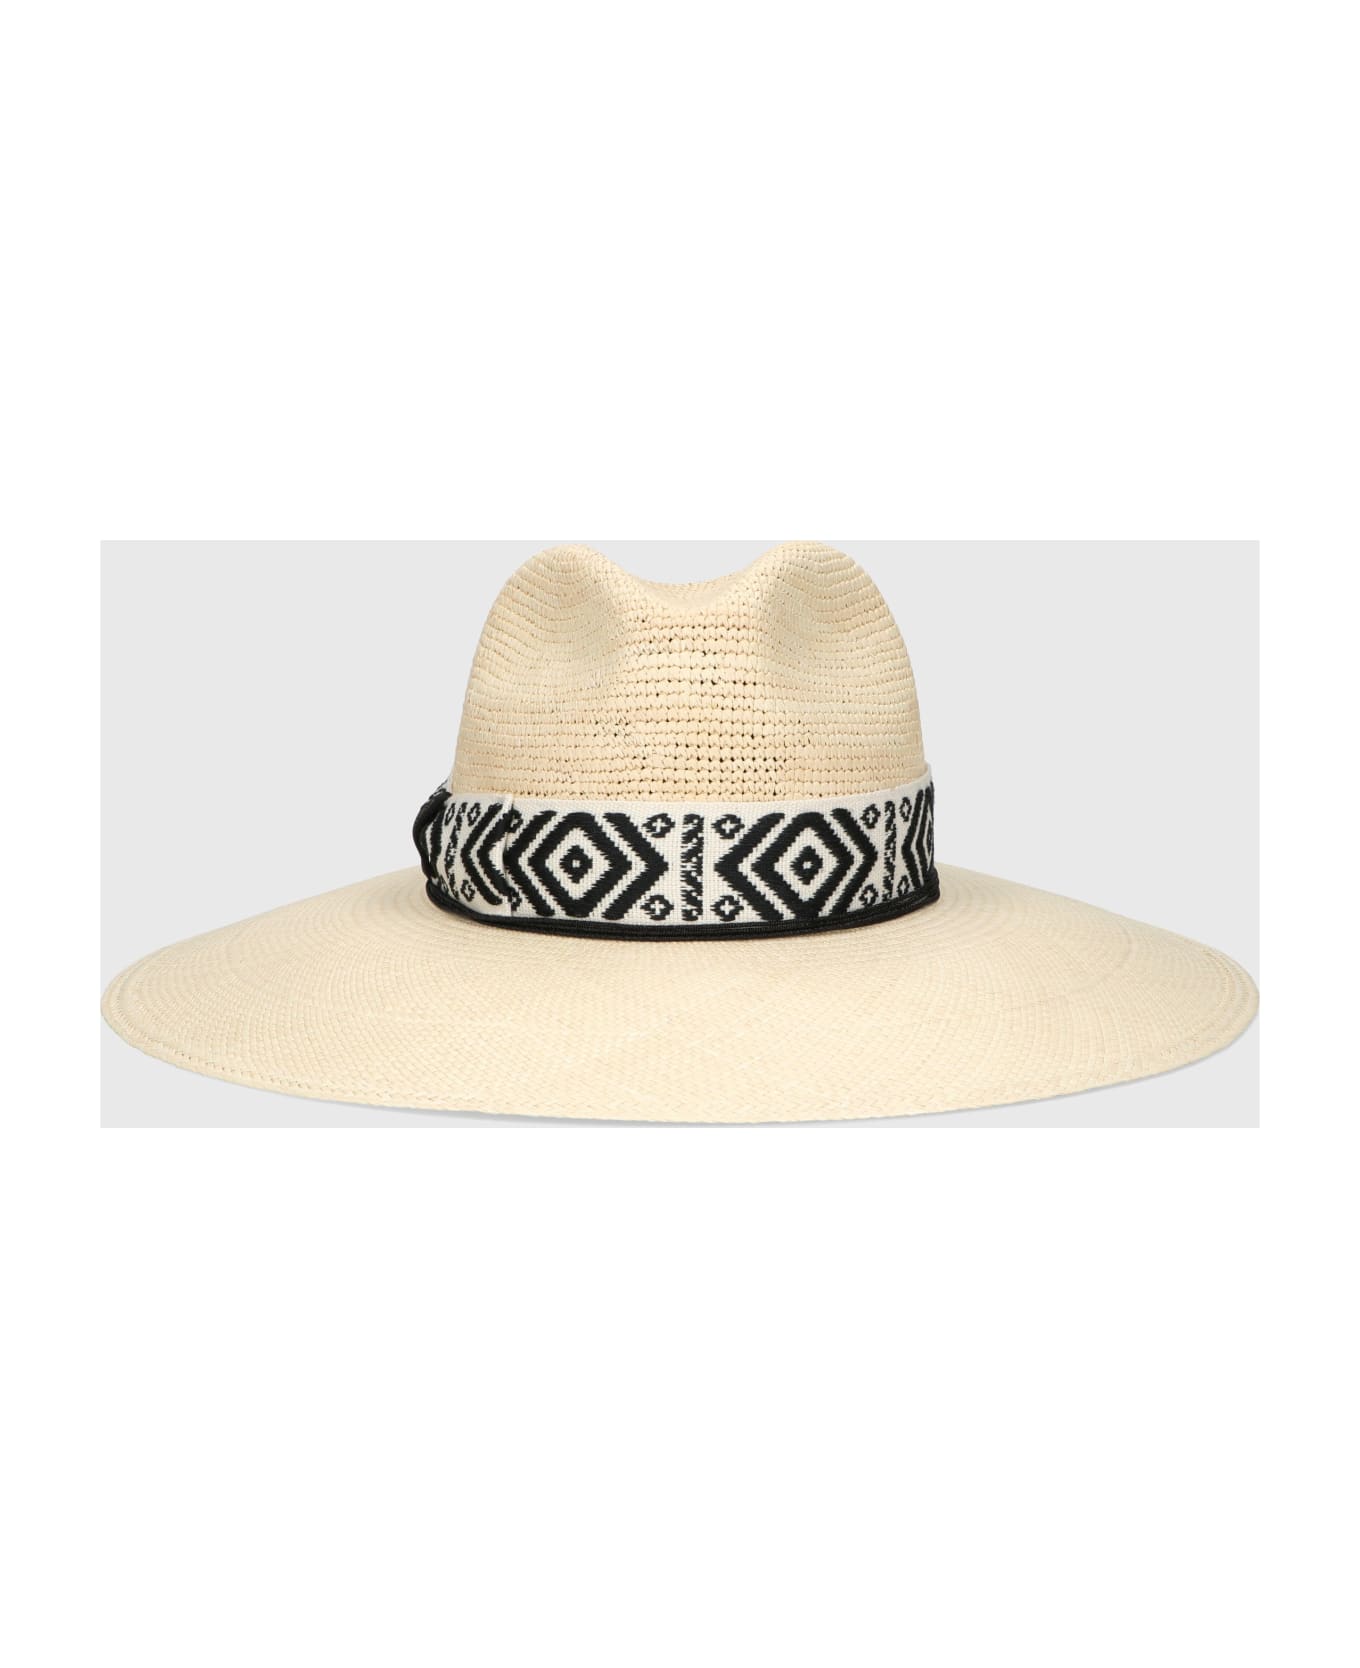 Borsalino Sophie Panama Semicrochet Patterned Hatband - NATURAL, PATTERNED BLACK/CREAM HAT BAND